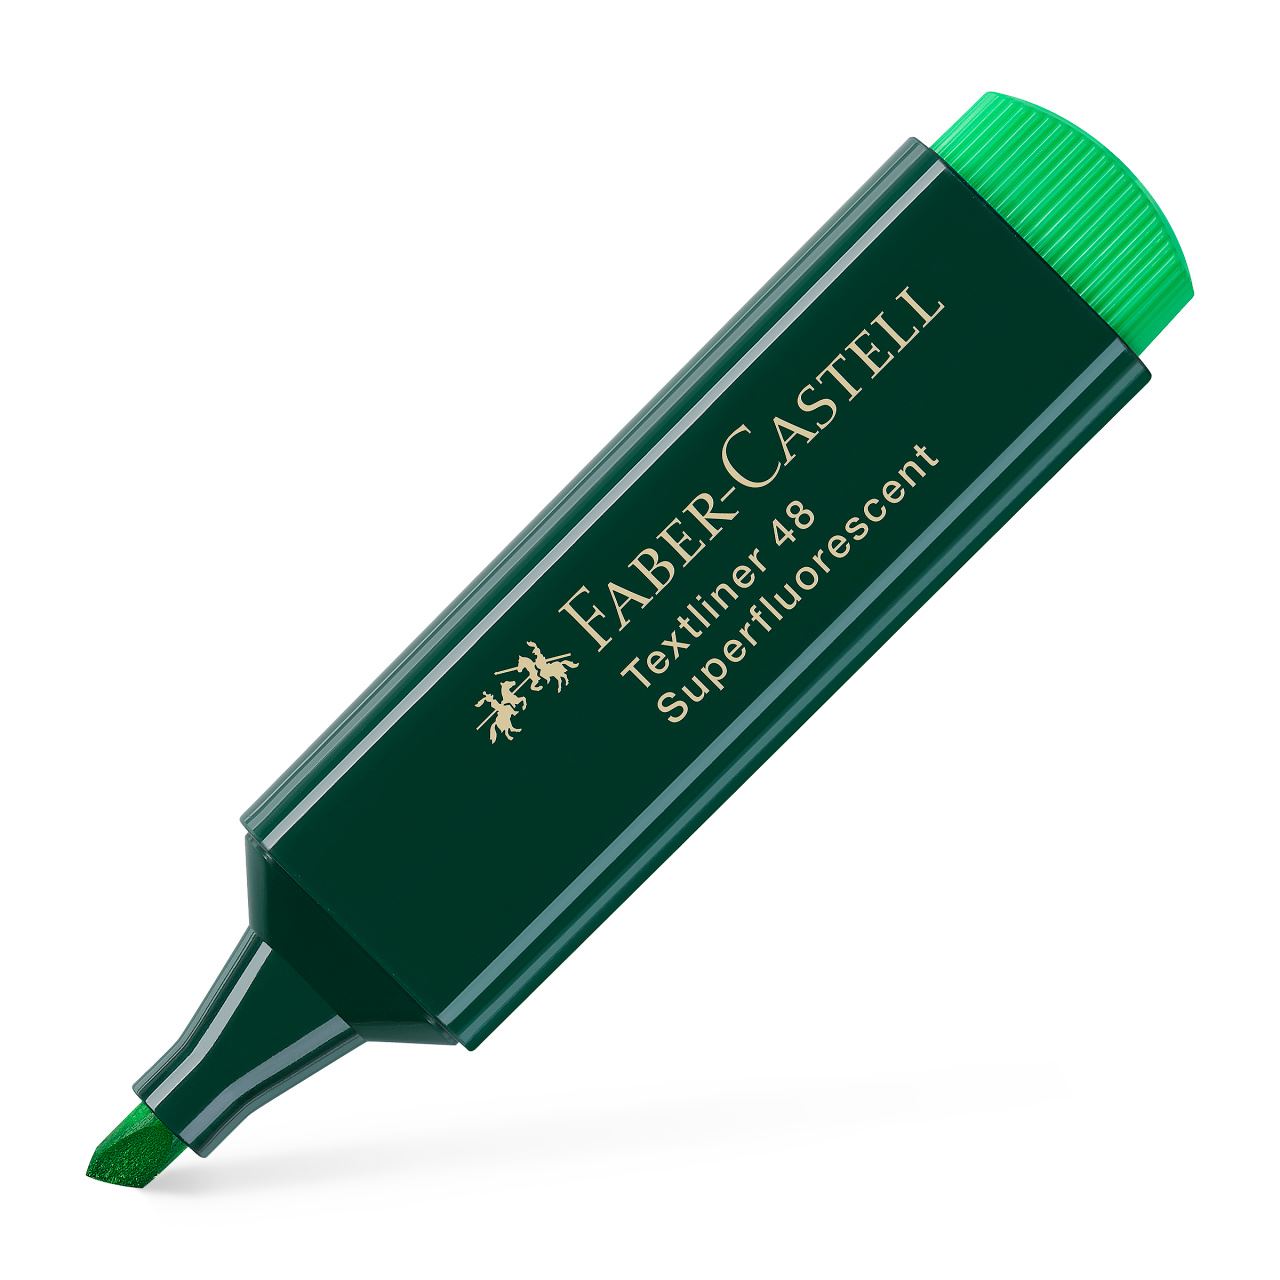 Faber-Castell - Textliner 48 Superfluorescent, green